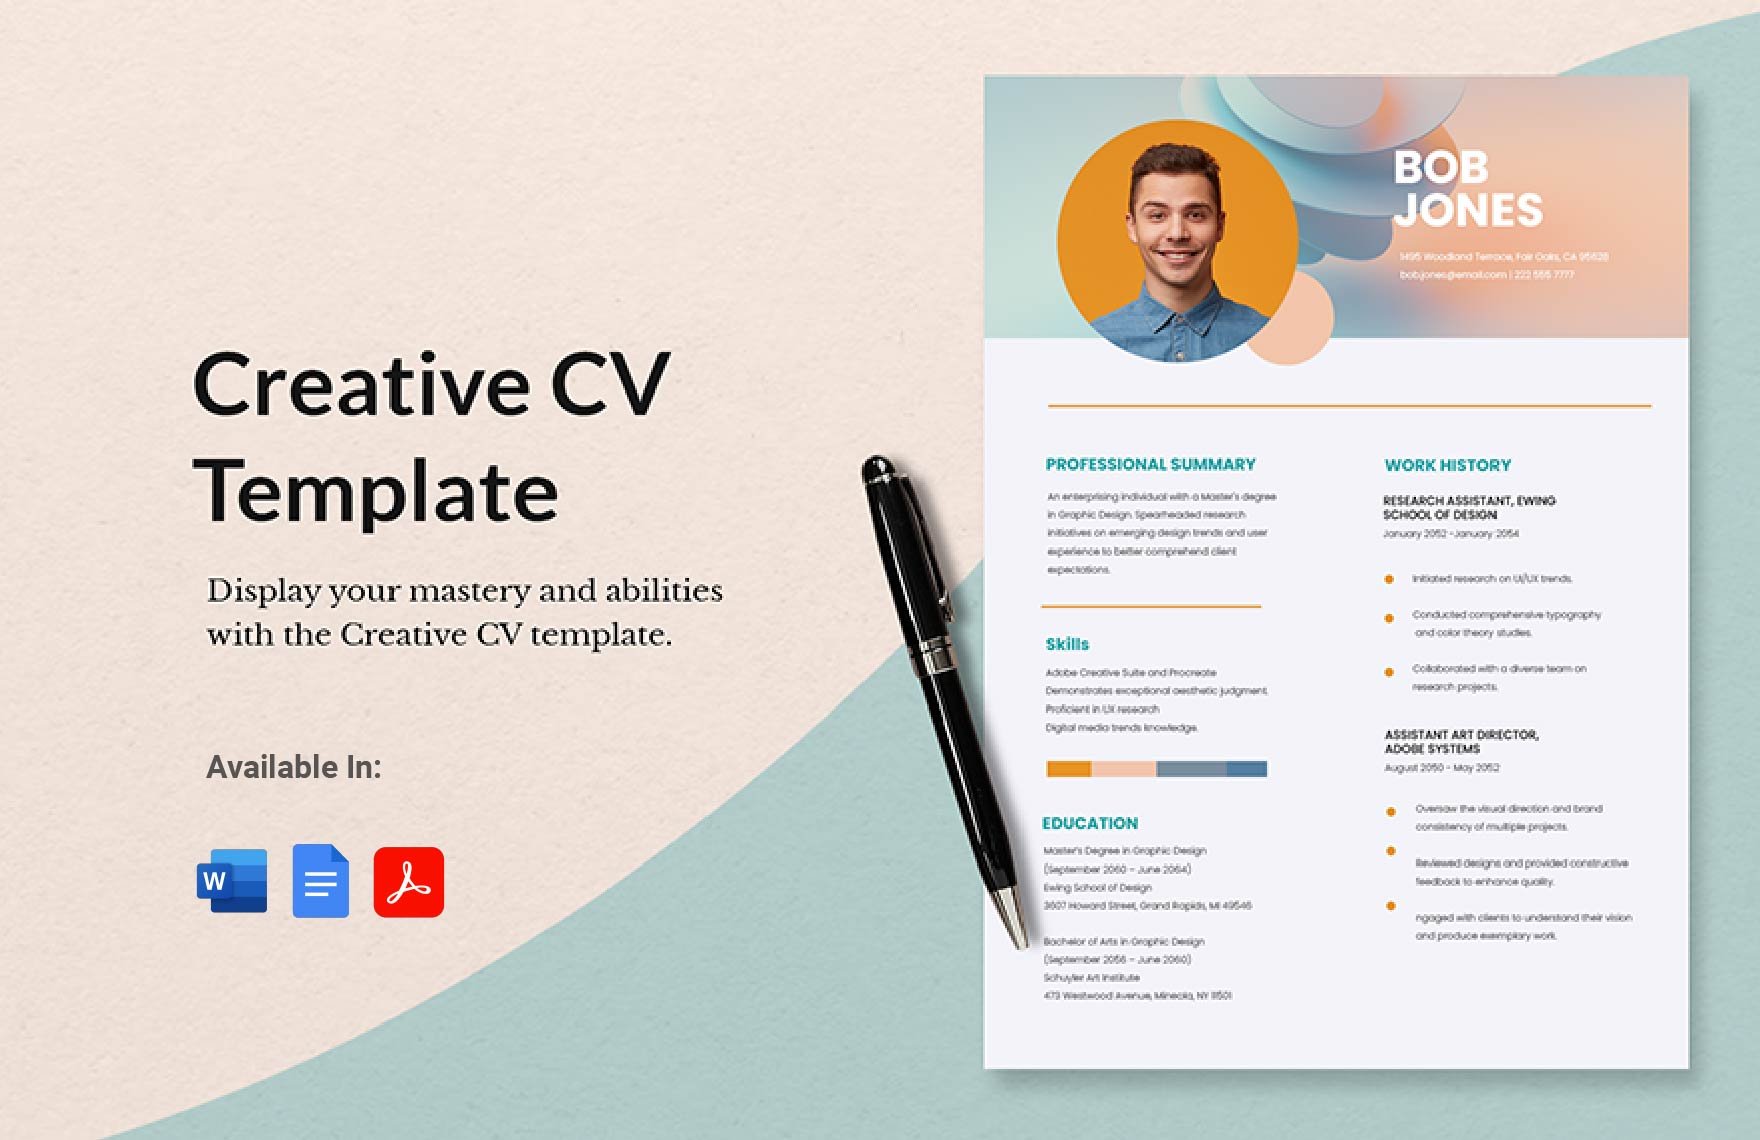 Creative CV Template